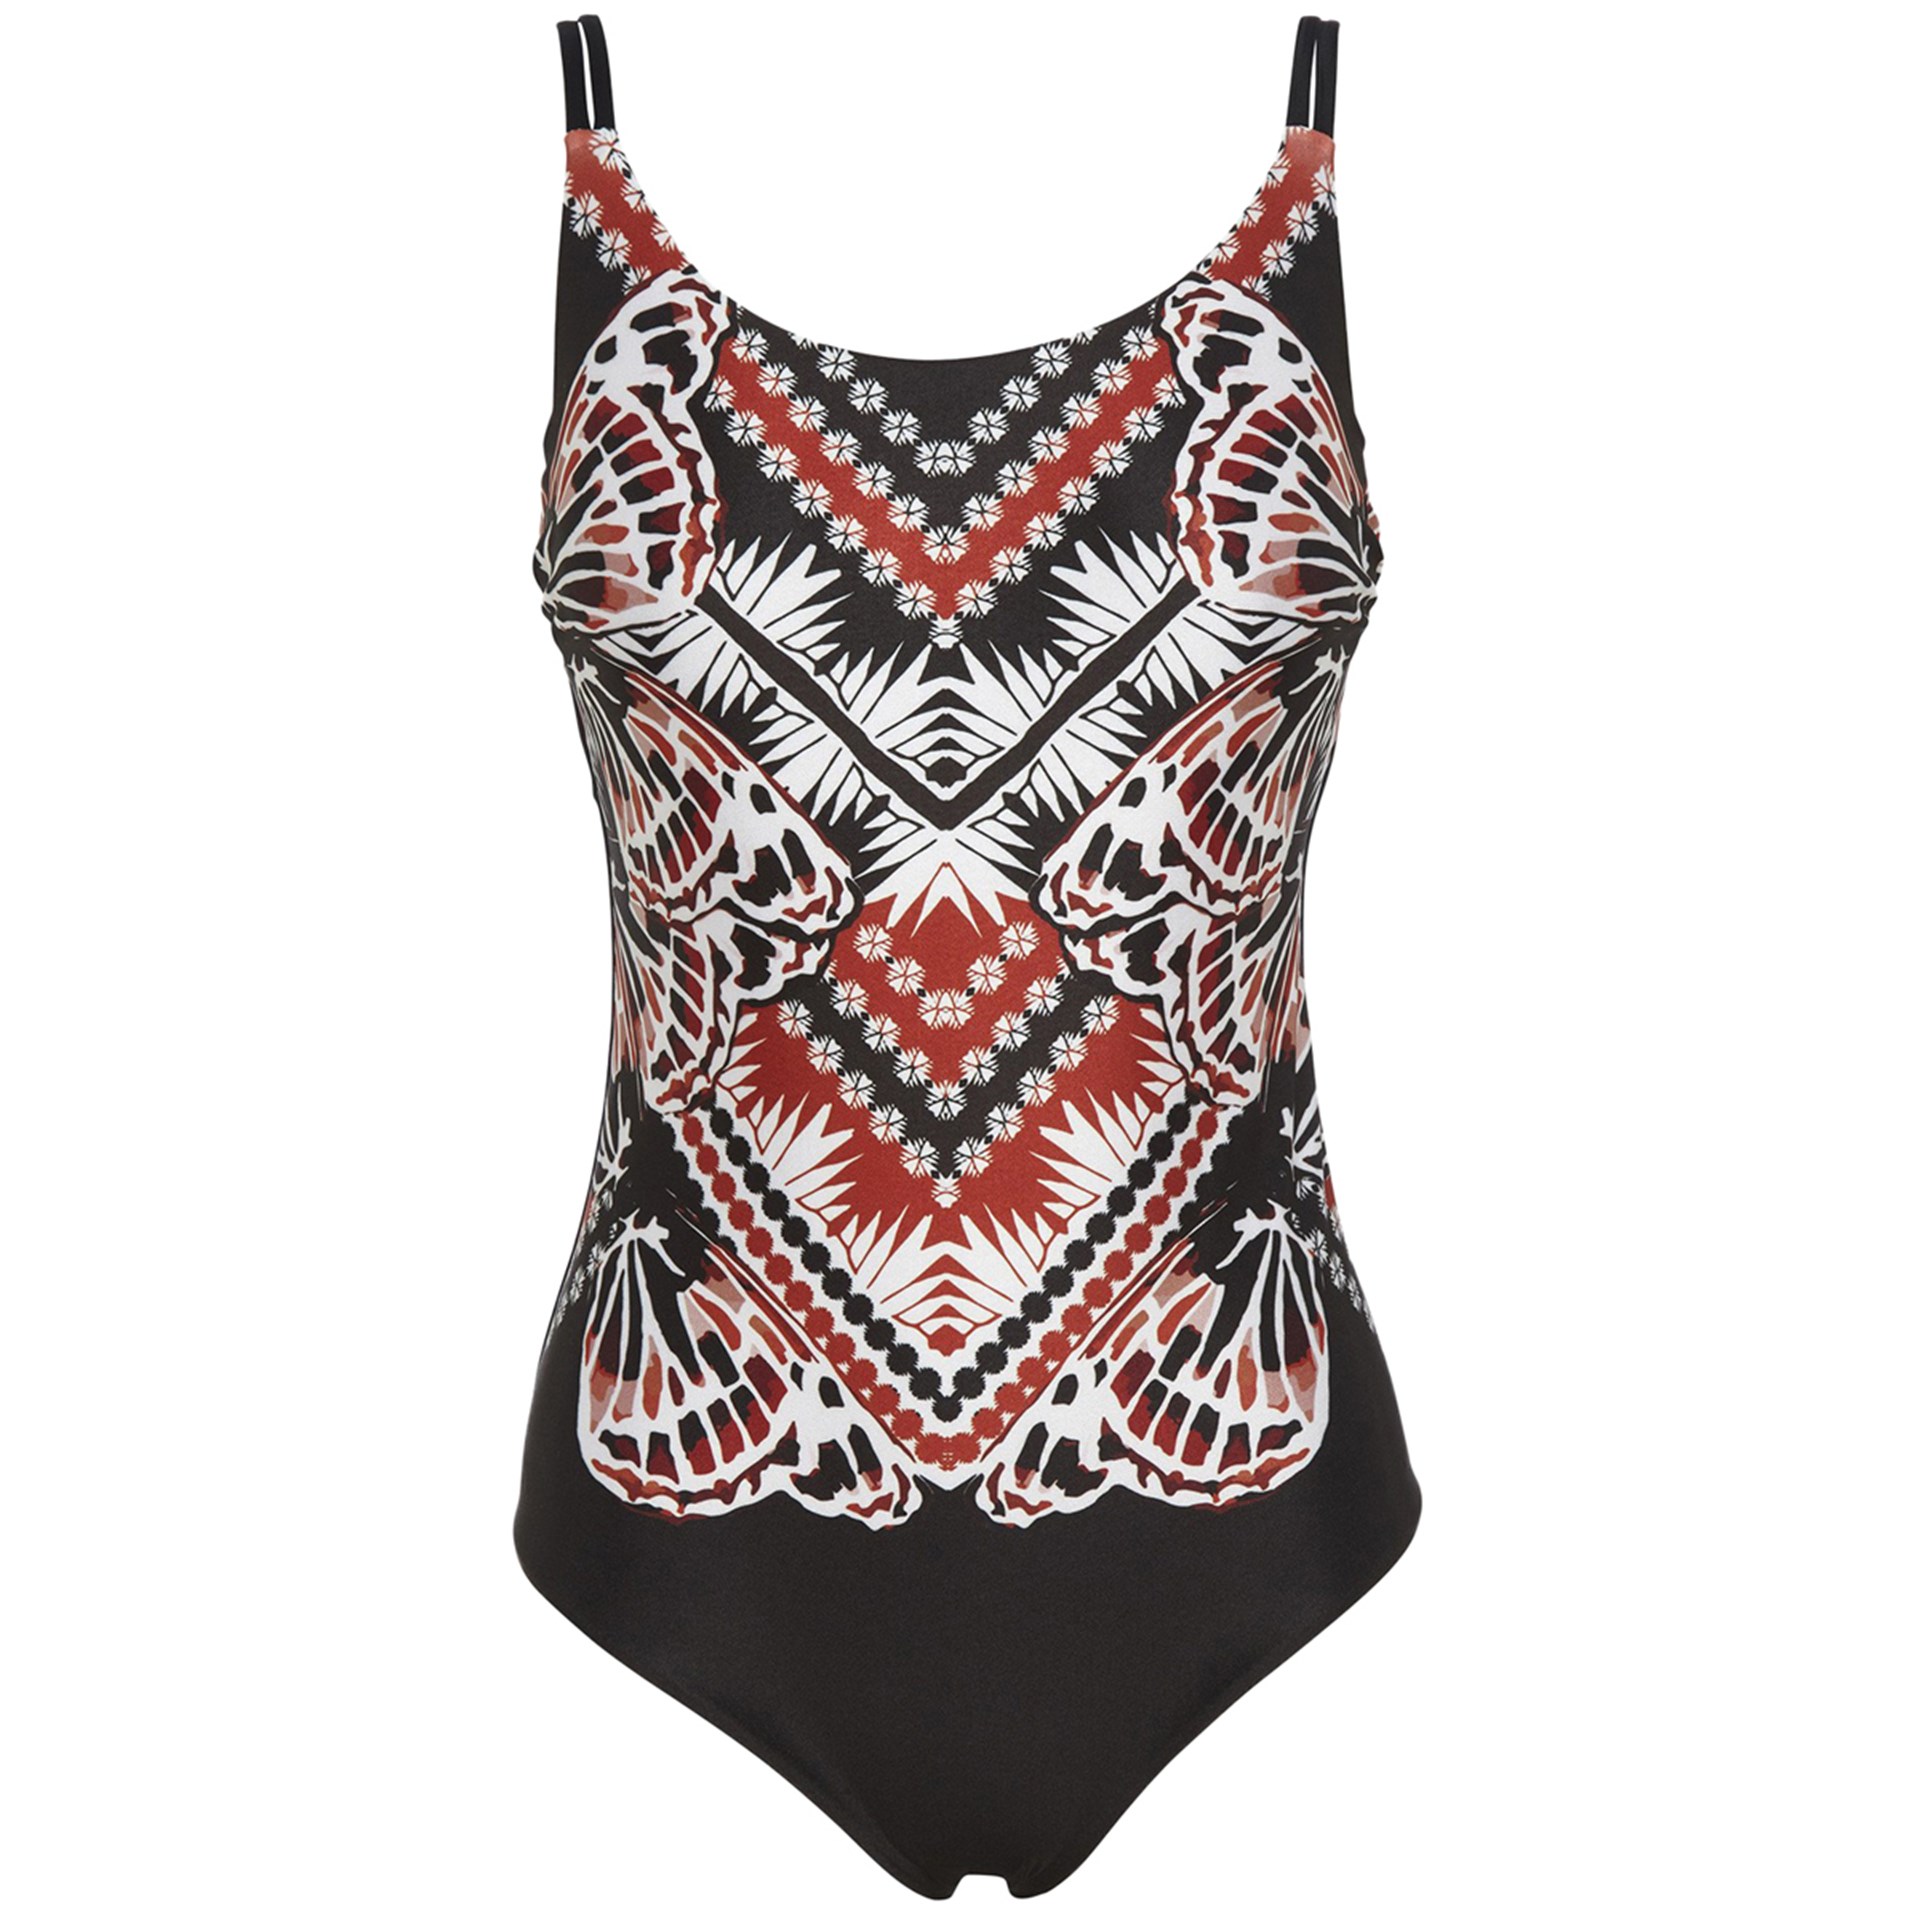 Bondi Born - Printed Swimsuit - Black | Upp till 70% | Afound.com